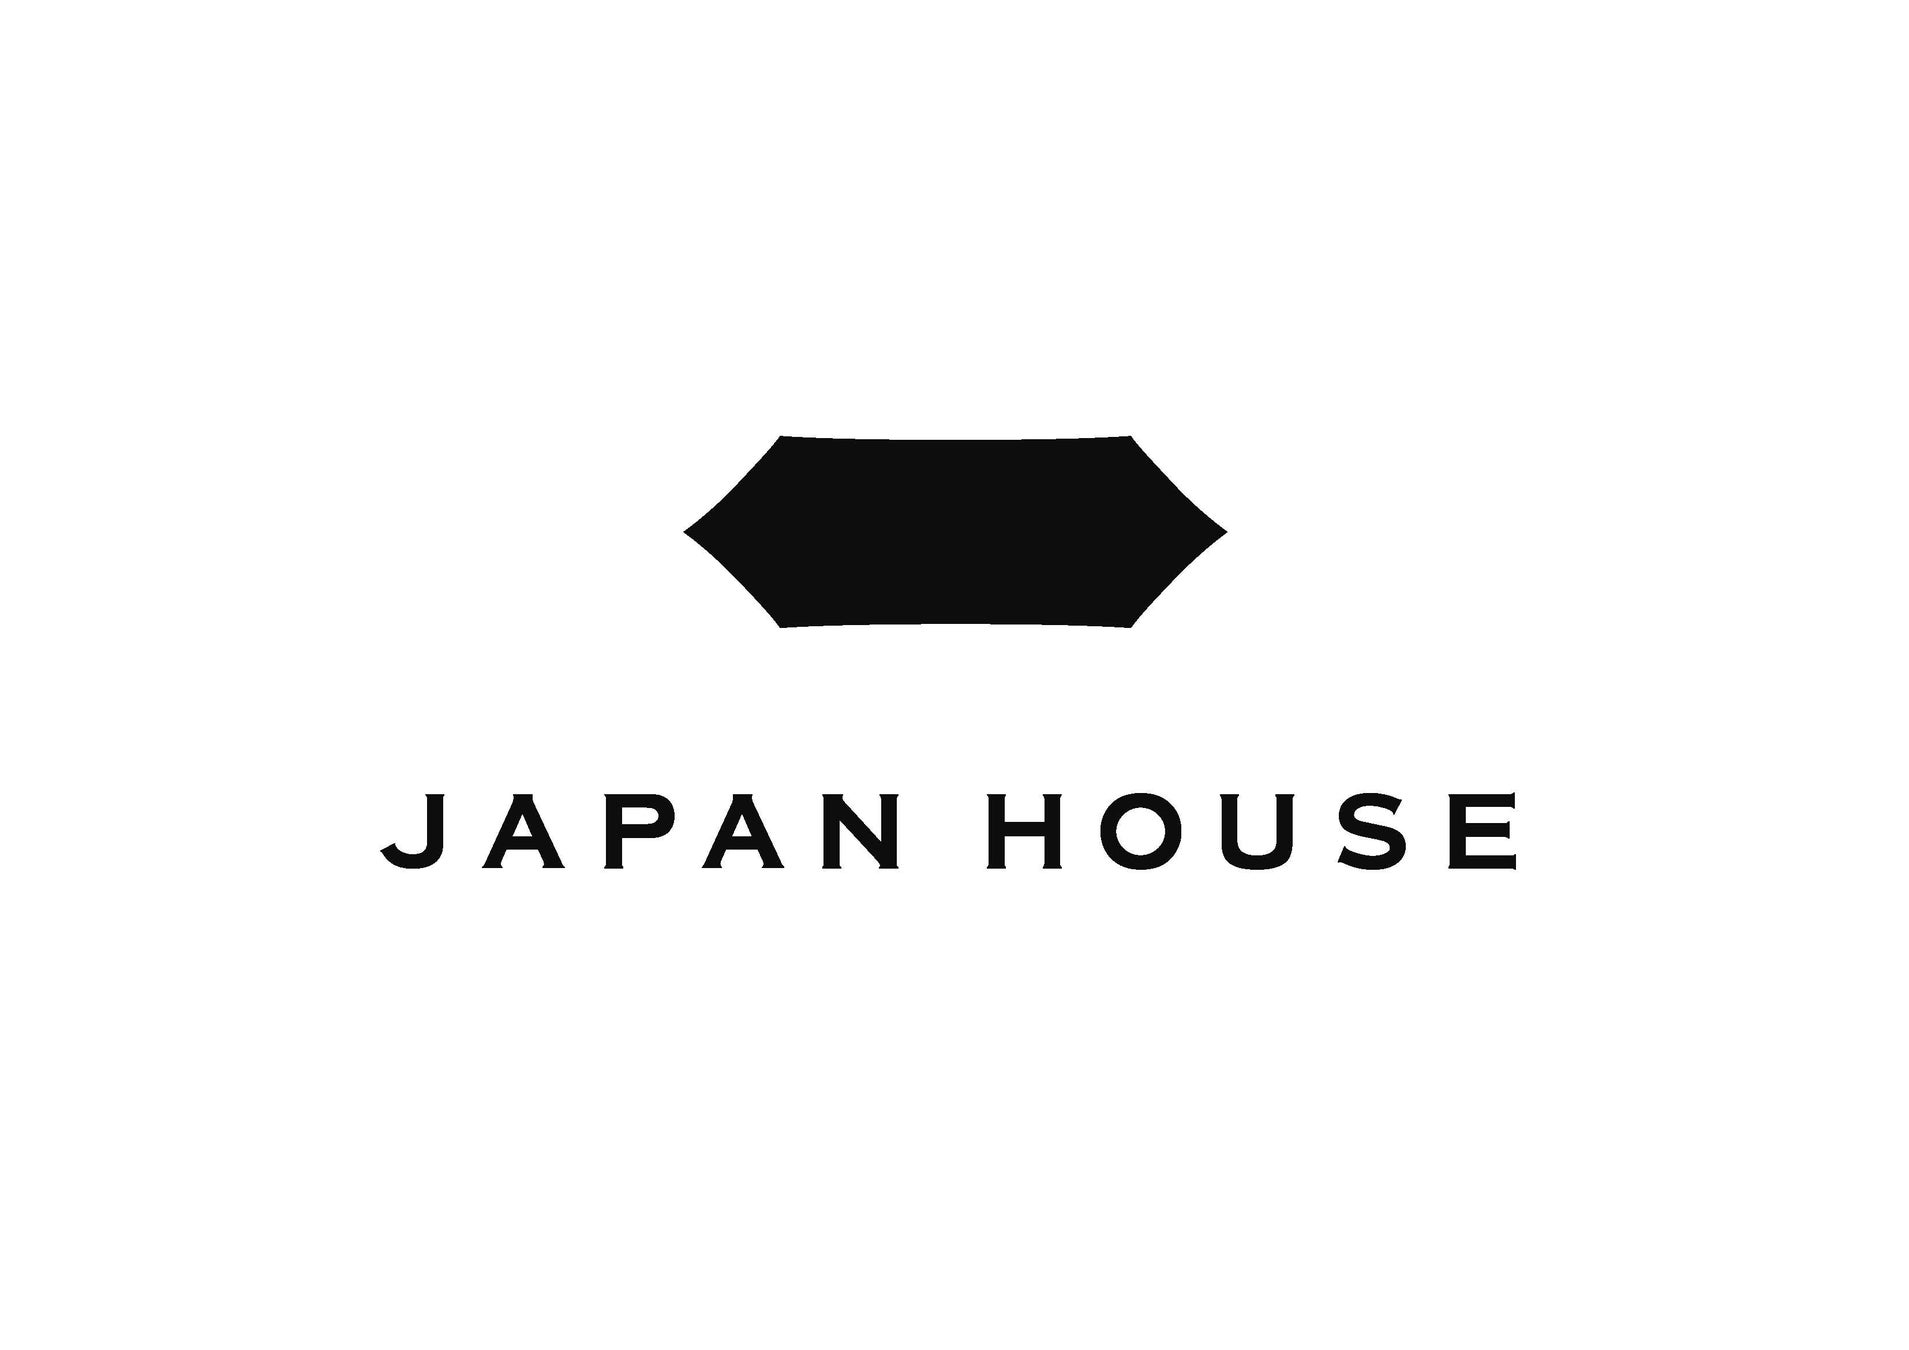 JAPAN HOUSE × SAGA MADO地域座談会「ワールド・トラベラーを日本の誇りでもてなす未来。原研哉 × サンドバー...